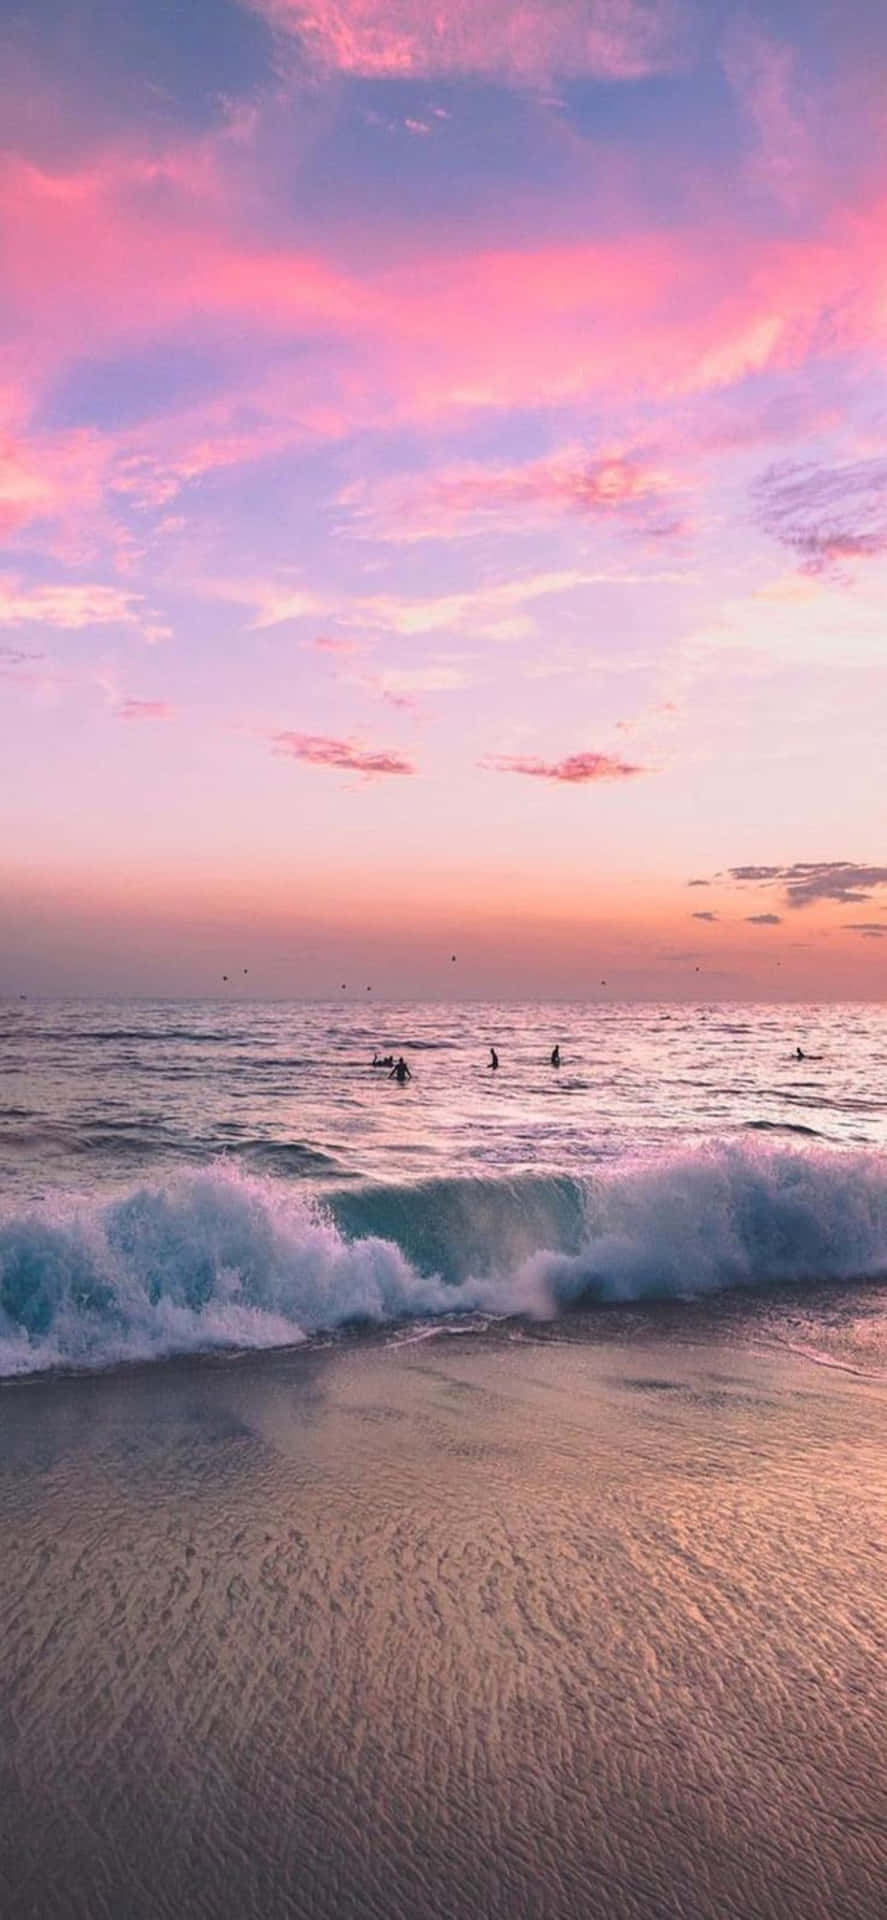 "enjoy The Serenity: Iphone X Beach Background"